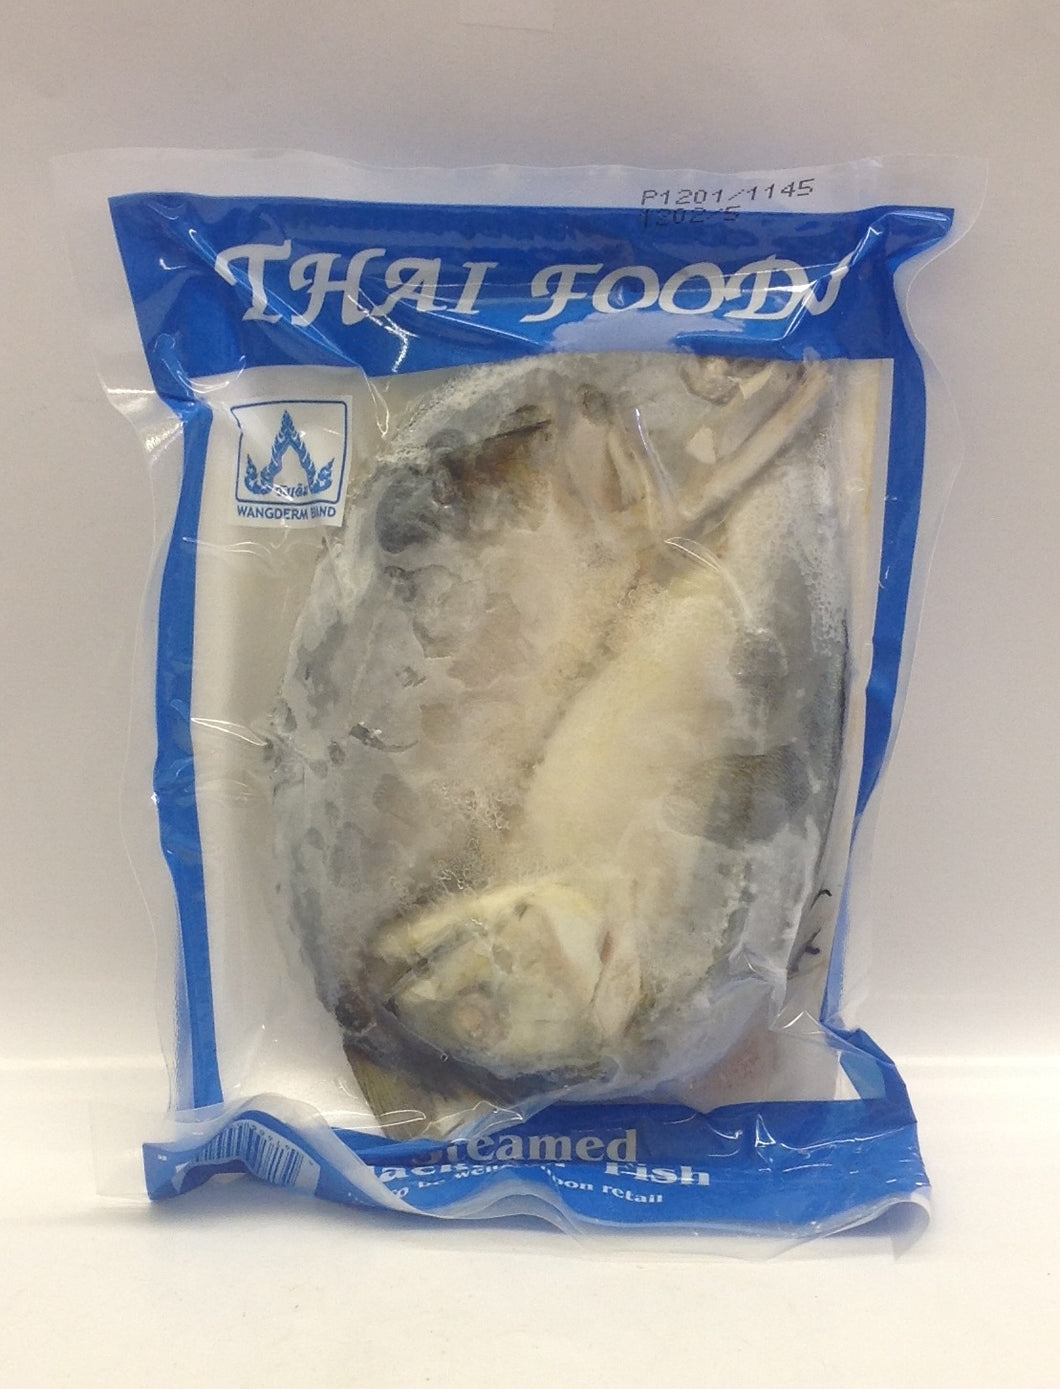 Wangderm - Frozen Cooked Steamed Mackerel - ปลาทูวังแช่แข็ง วังเดิม